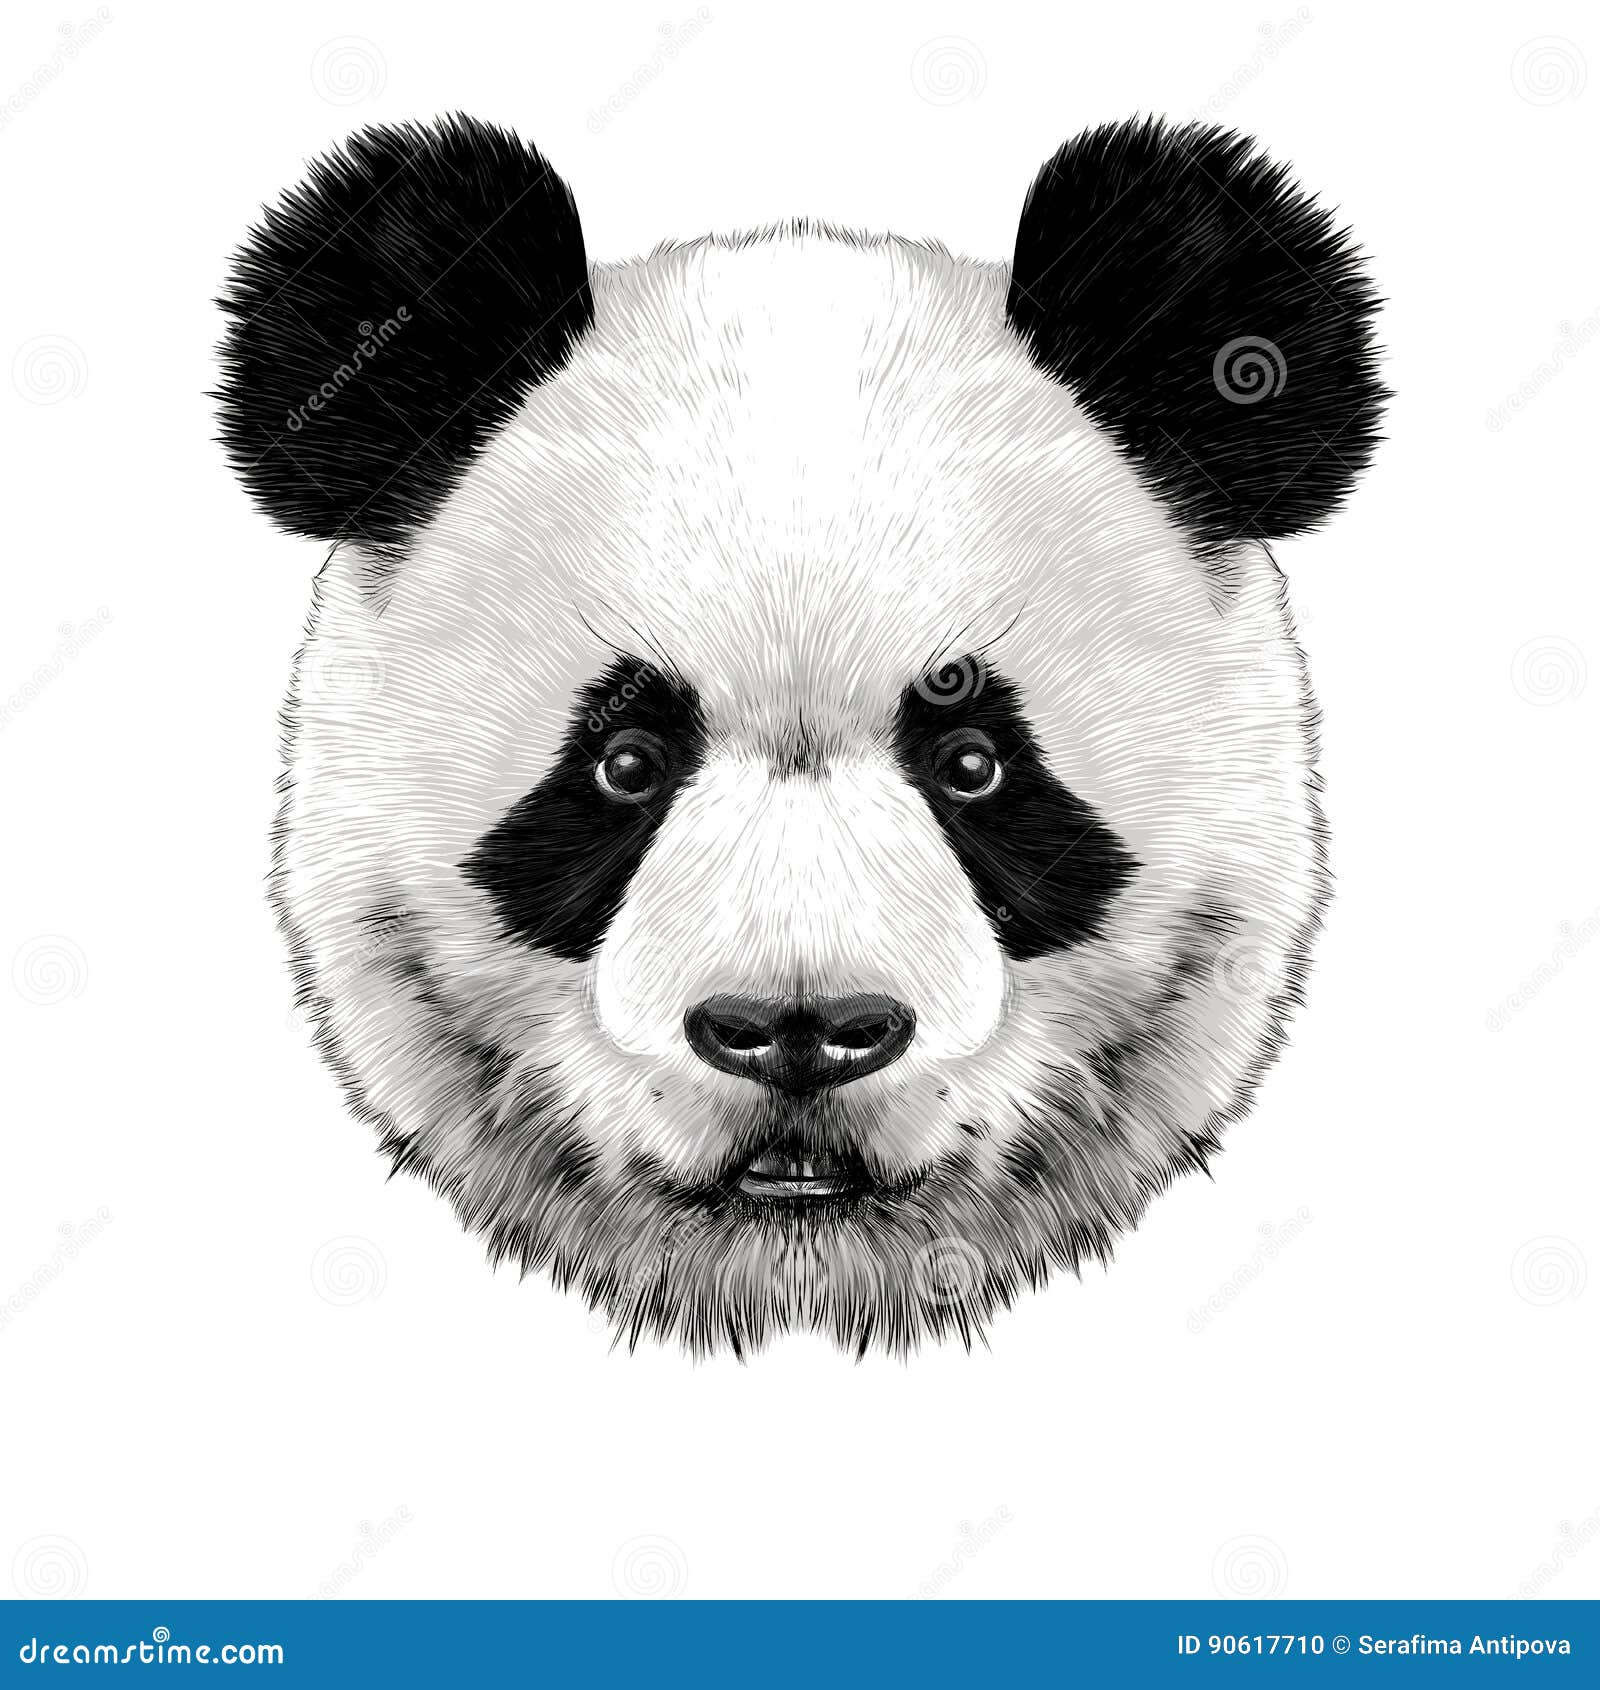 Panda head stock illustration. Illustration of head, background - 90617710